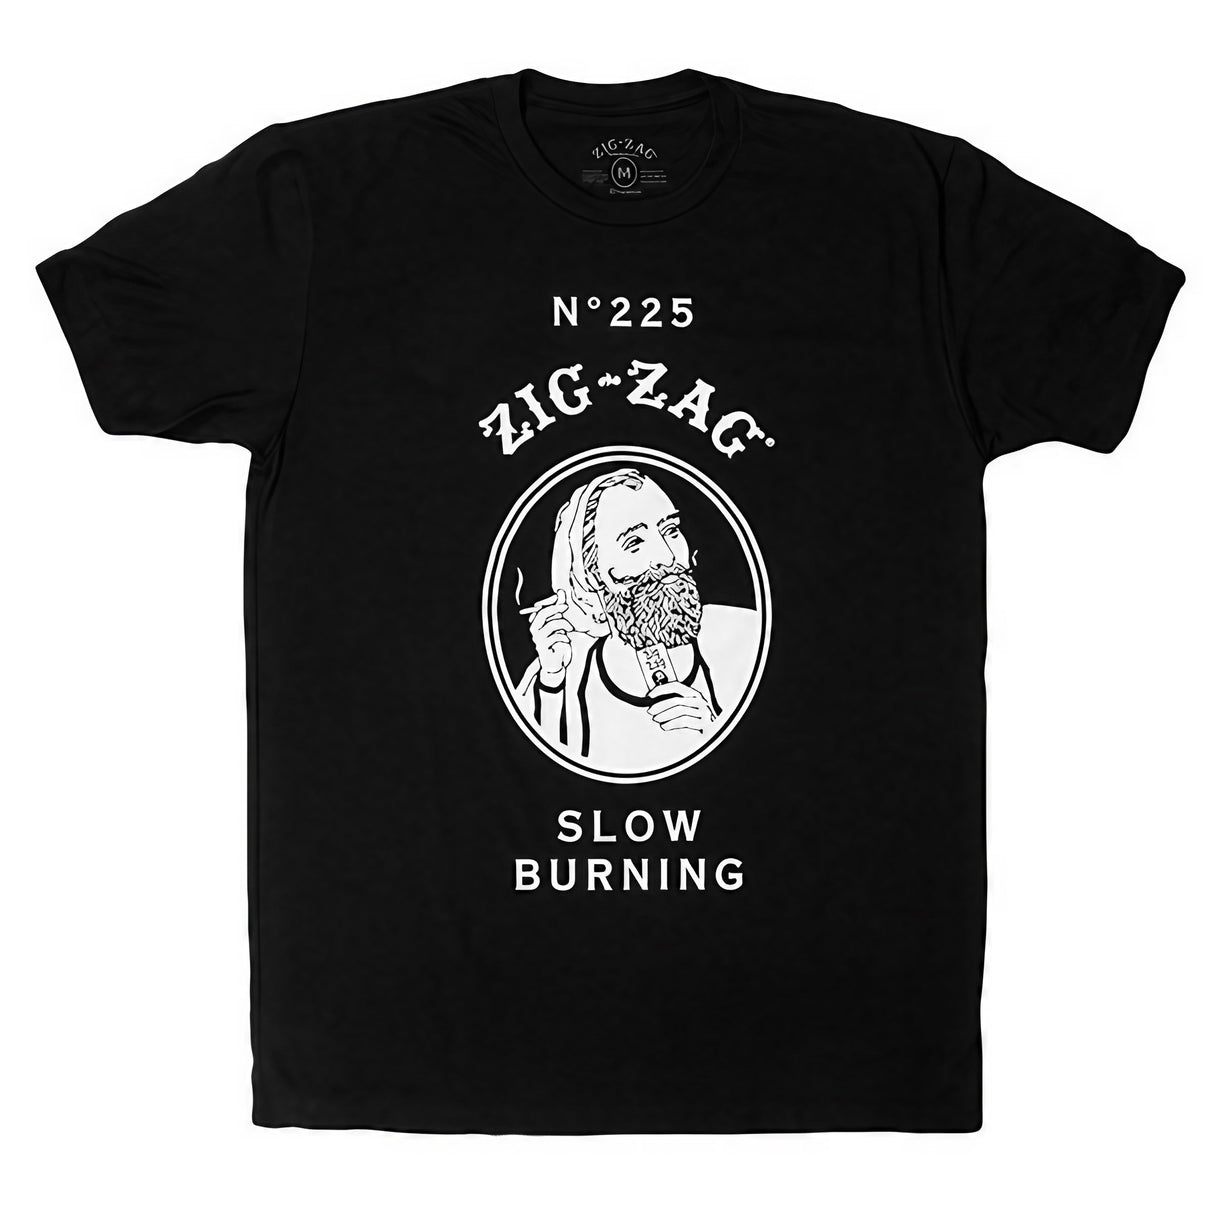 Zig Zag Black T-Shirt featuring iconic logo, fun novelty design, unisex cotton blend, front view